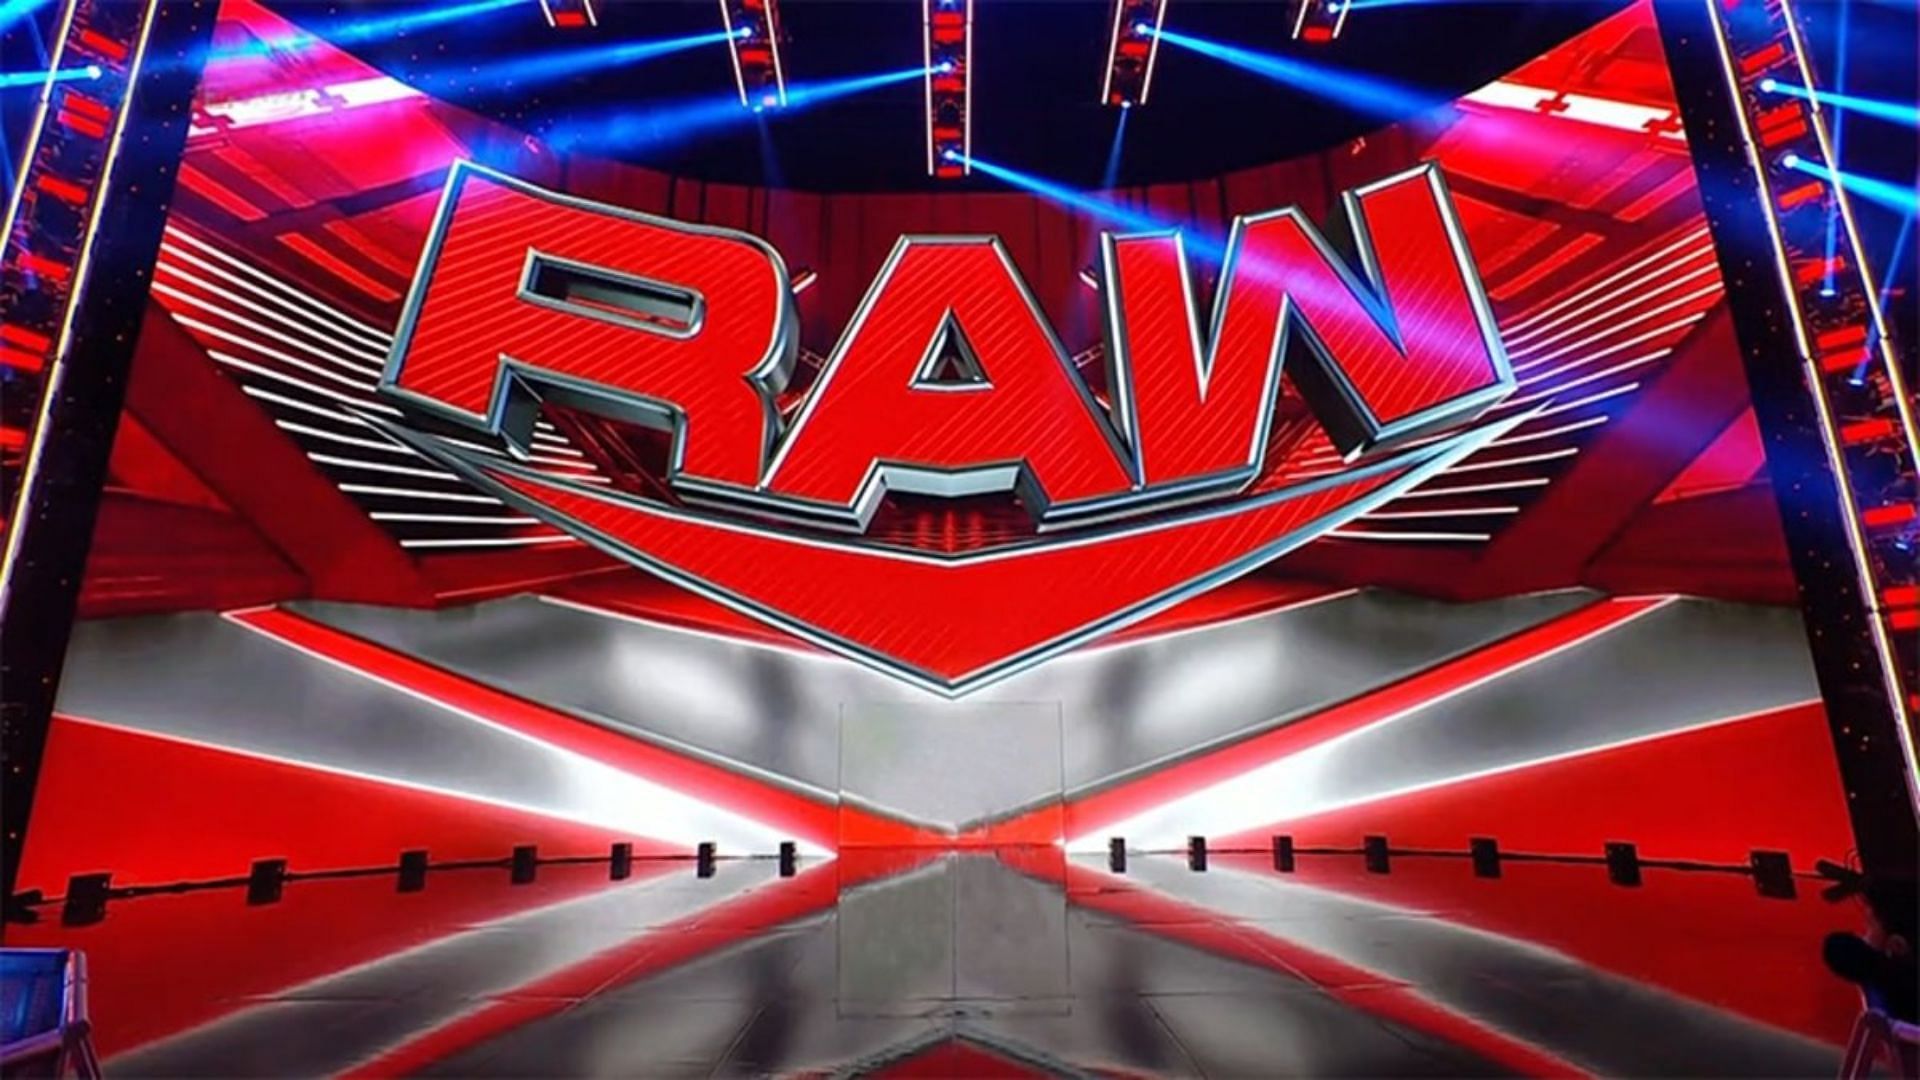 WWE RAW featured a post-match storyline development.